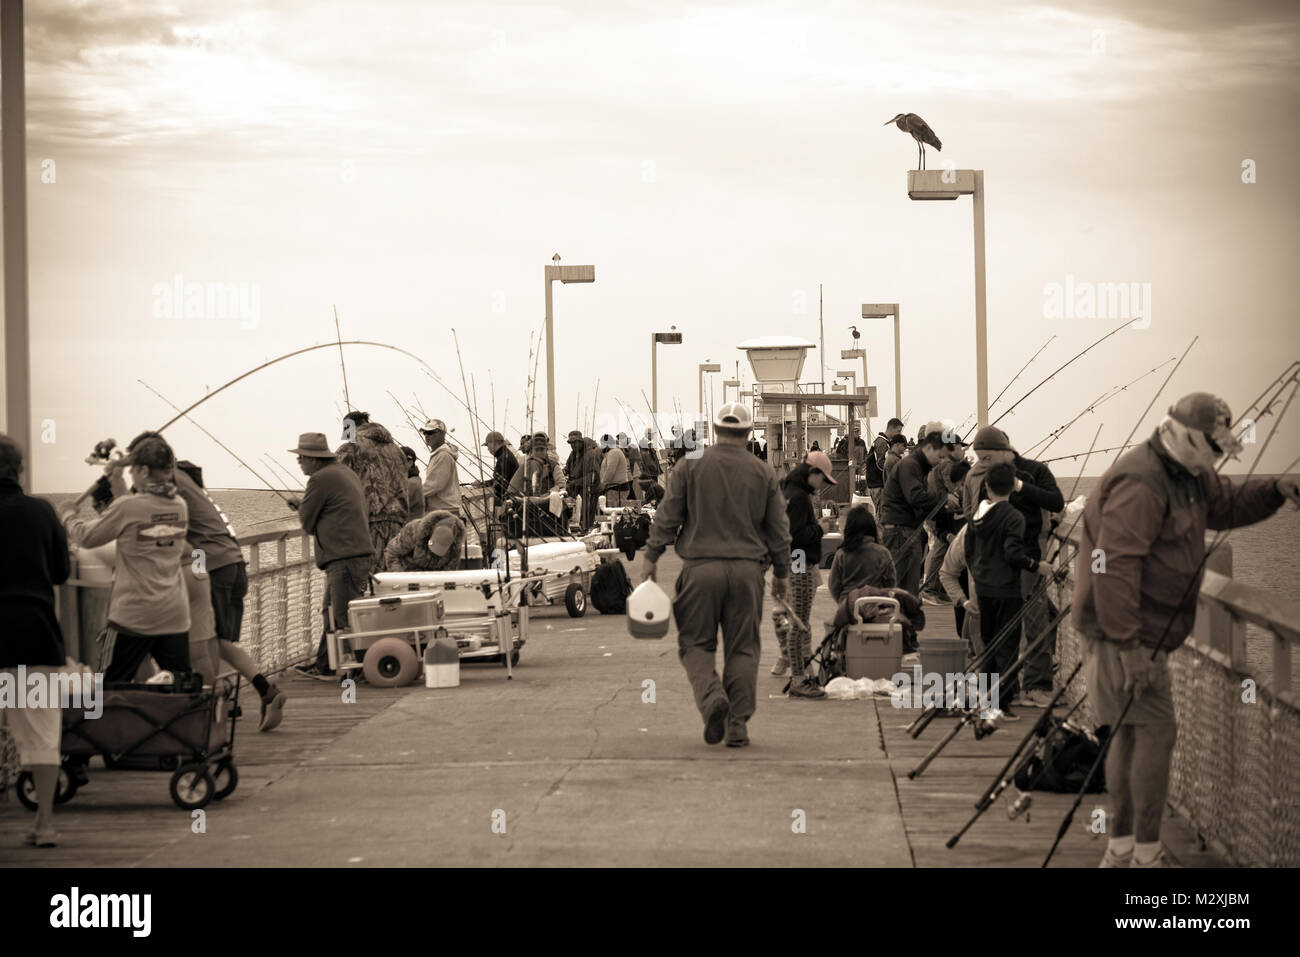 Fishermen on the pier Stock Photo